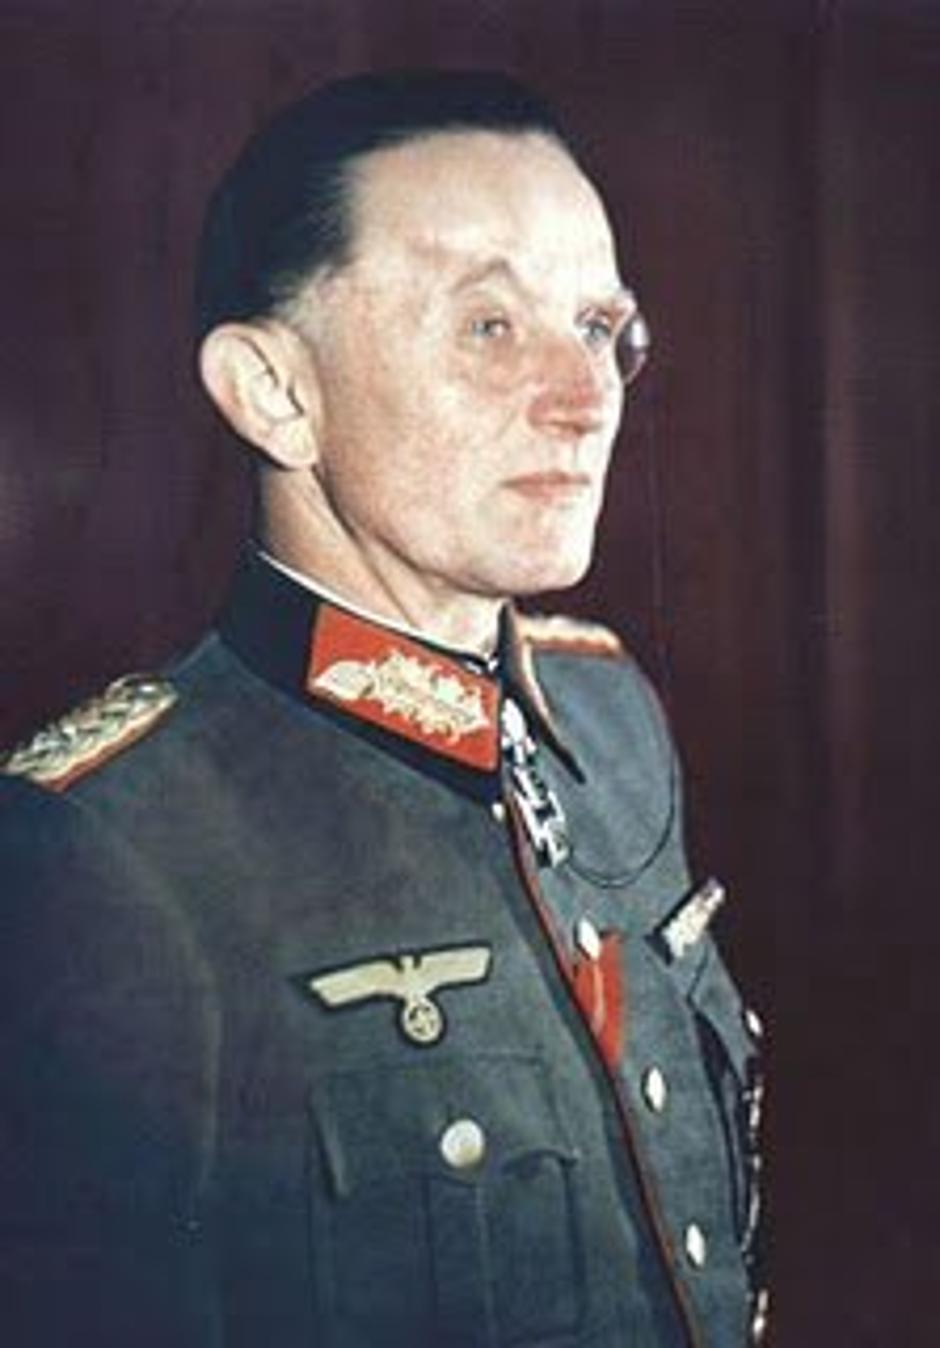 Fotografije nacista iz Drugog svjetskoh rata | Author: Bundesarchiv/ CC-BY-SA 3.0